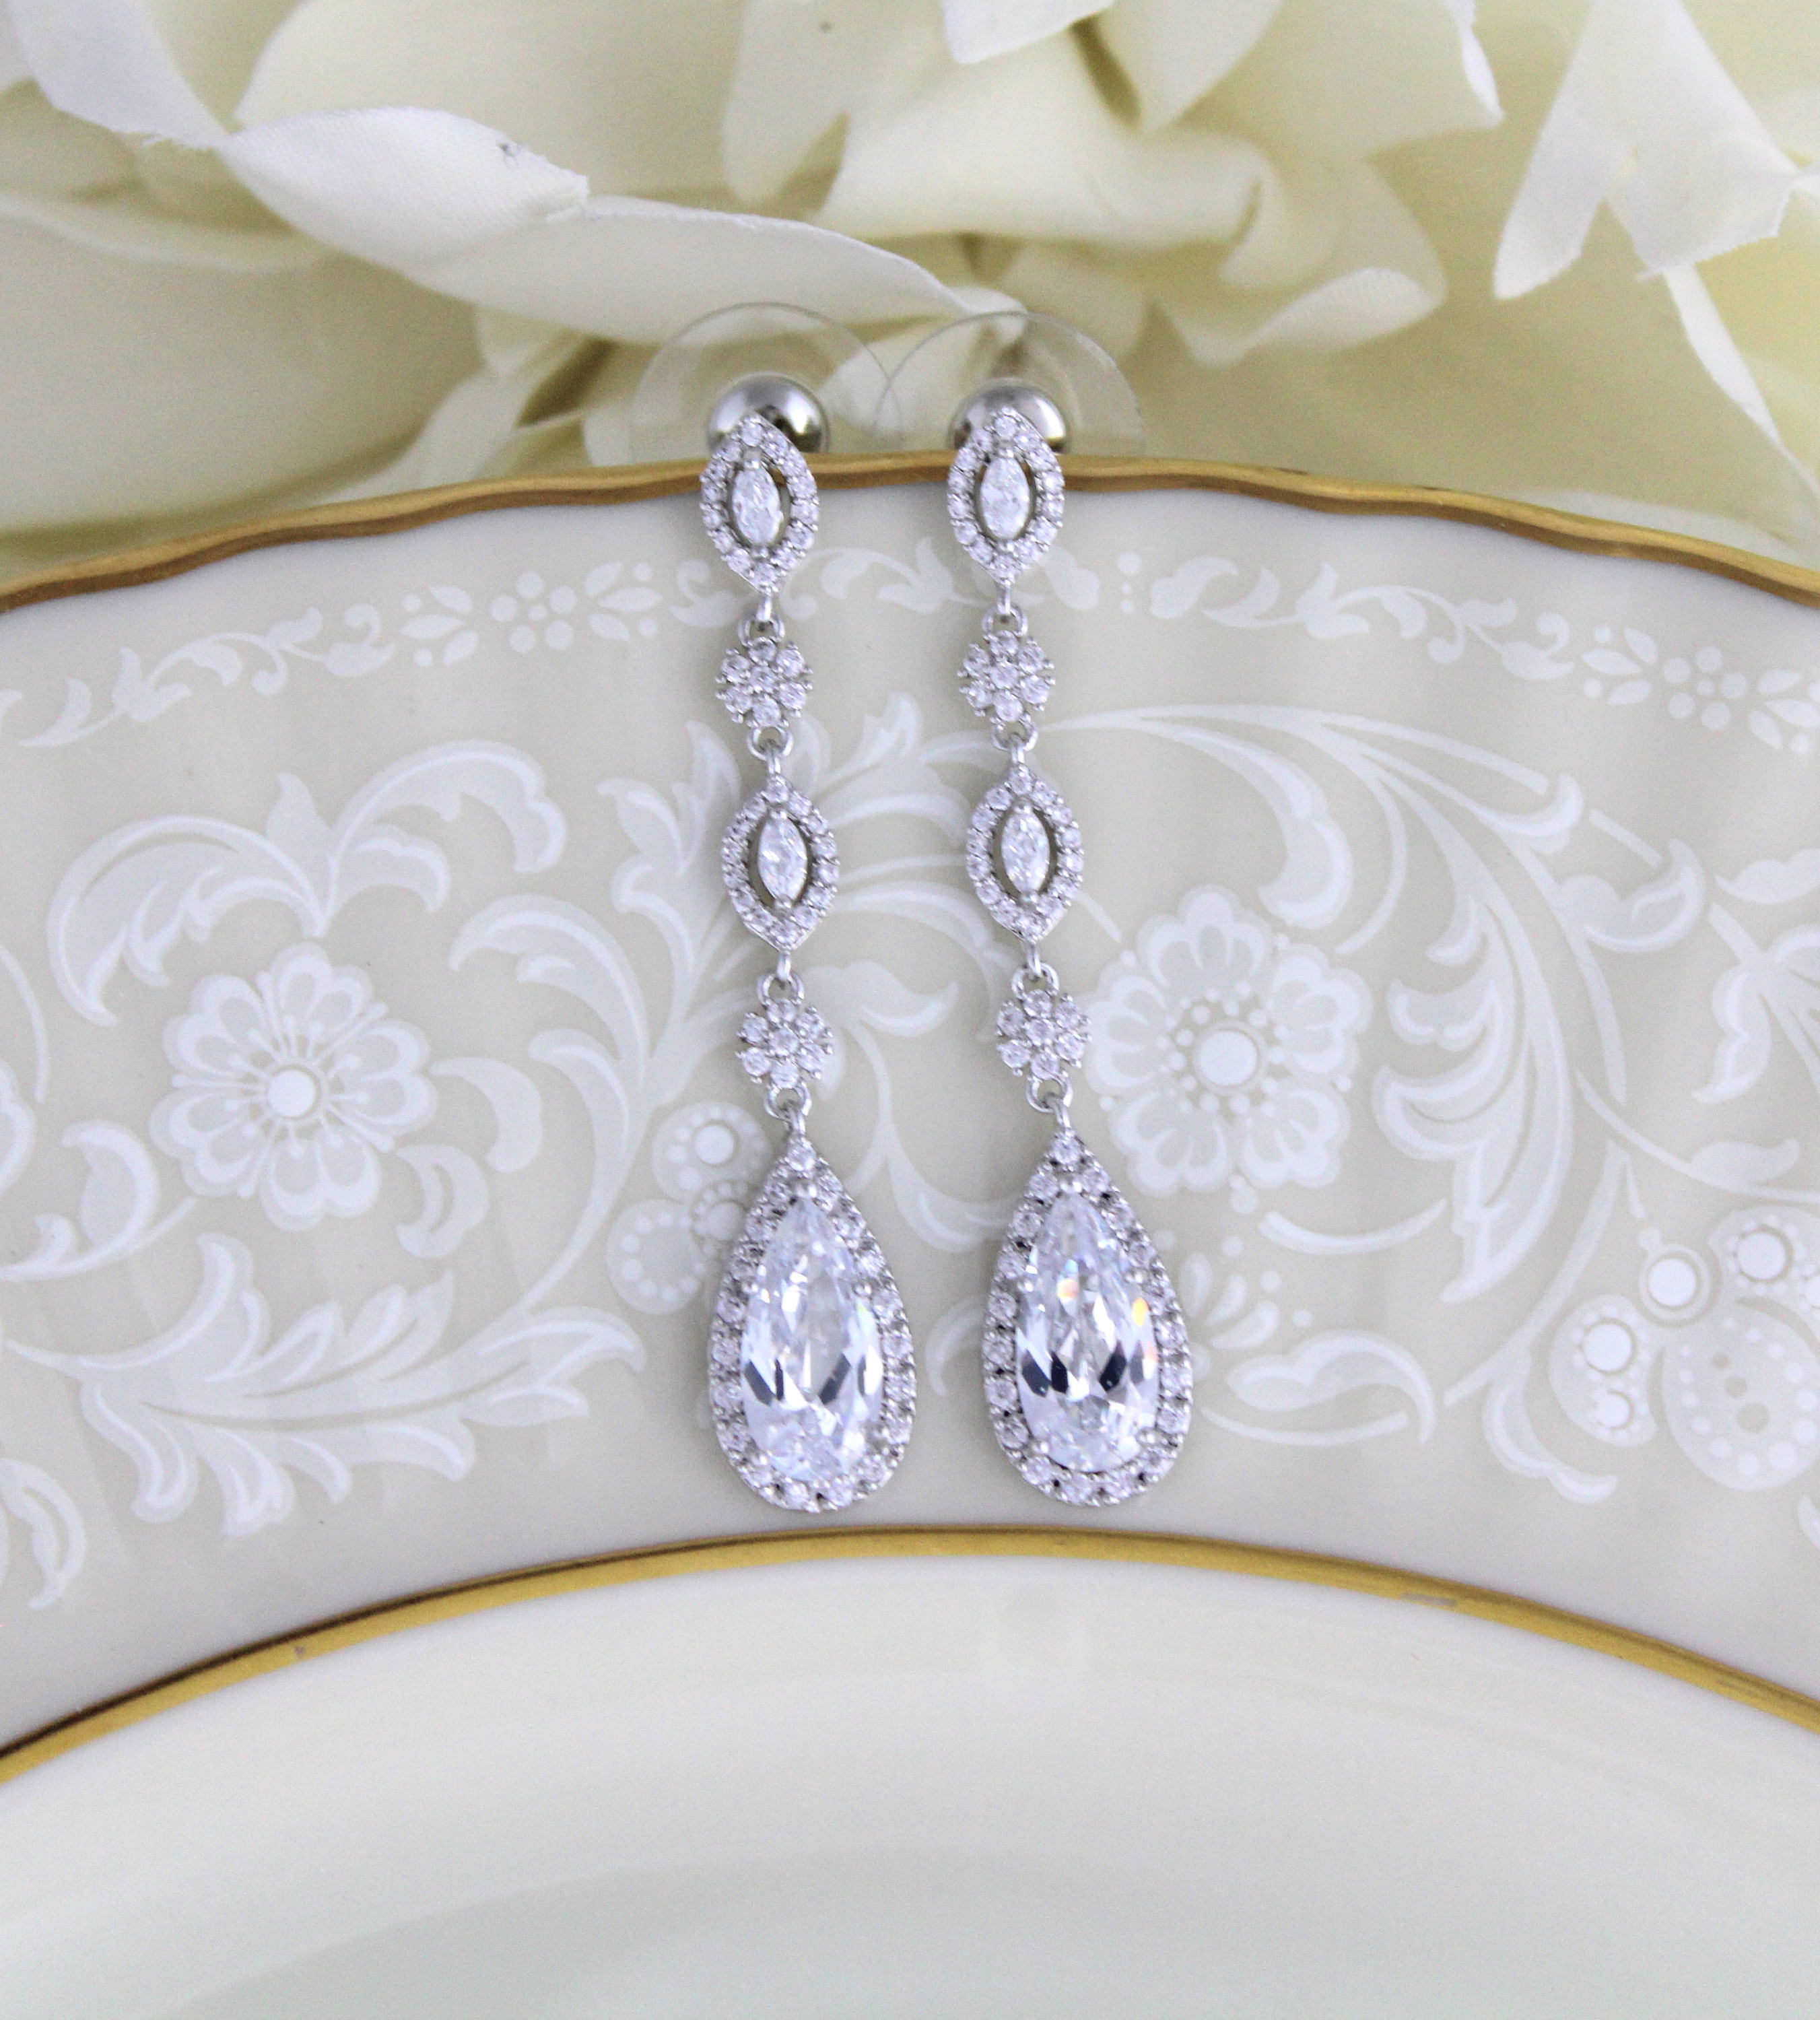 Diamond Bridal Earrings Gold Wedding Tear Drops Bridesmaid Jewelry Gifts E2418 CZ CRYSTAL TEARDROPS Big Cubic Zirconia Heart Dangles